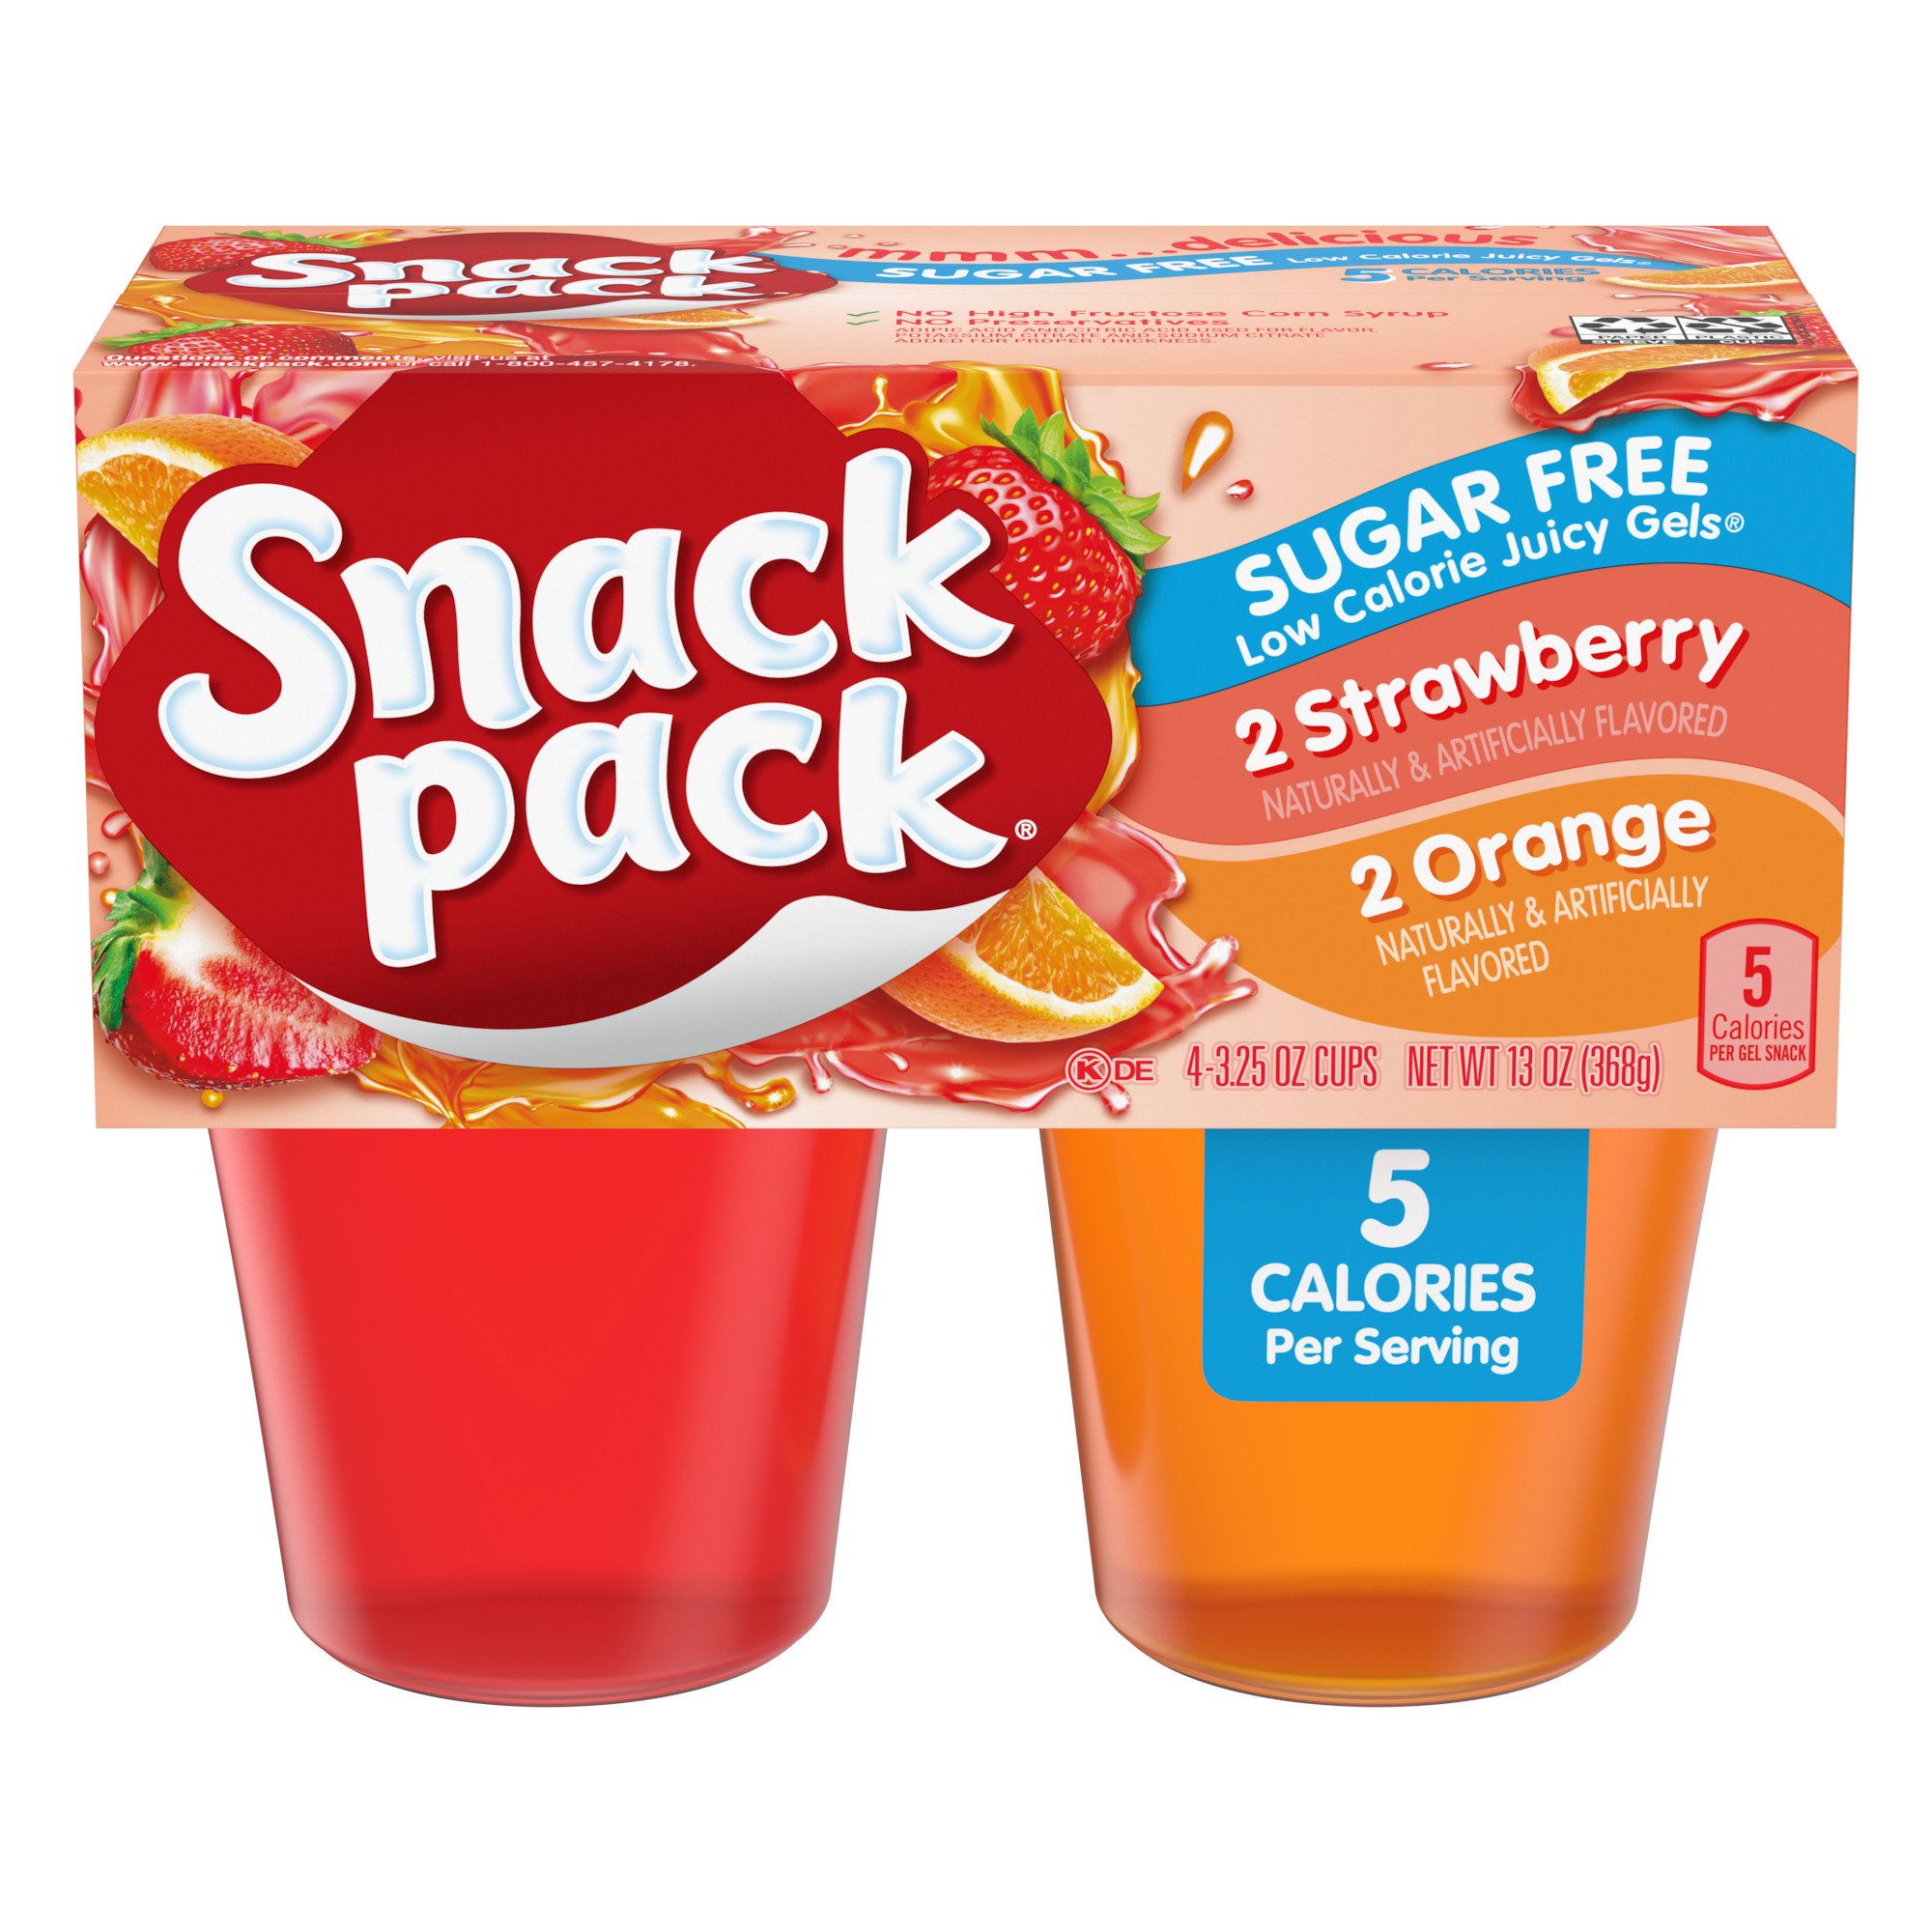 Snack Sugar Free Strawberry & Orange Juicy Gels Cups - Shop Pudding & Gelatin at H-E-B